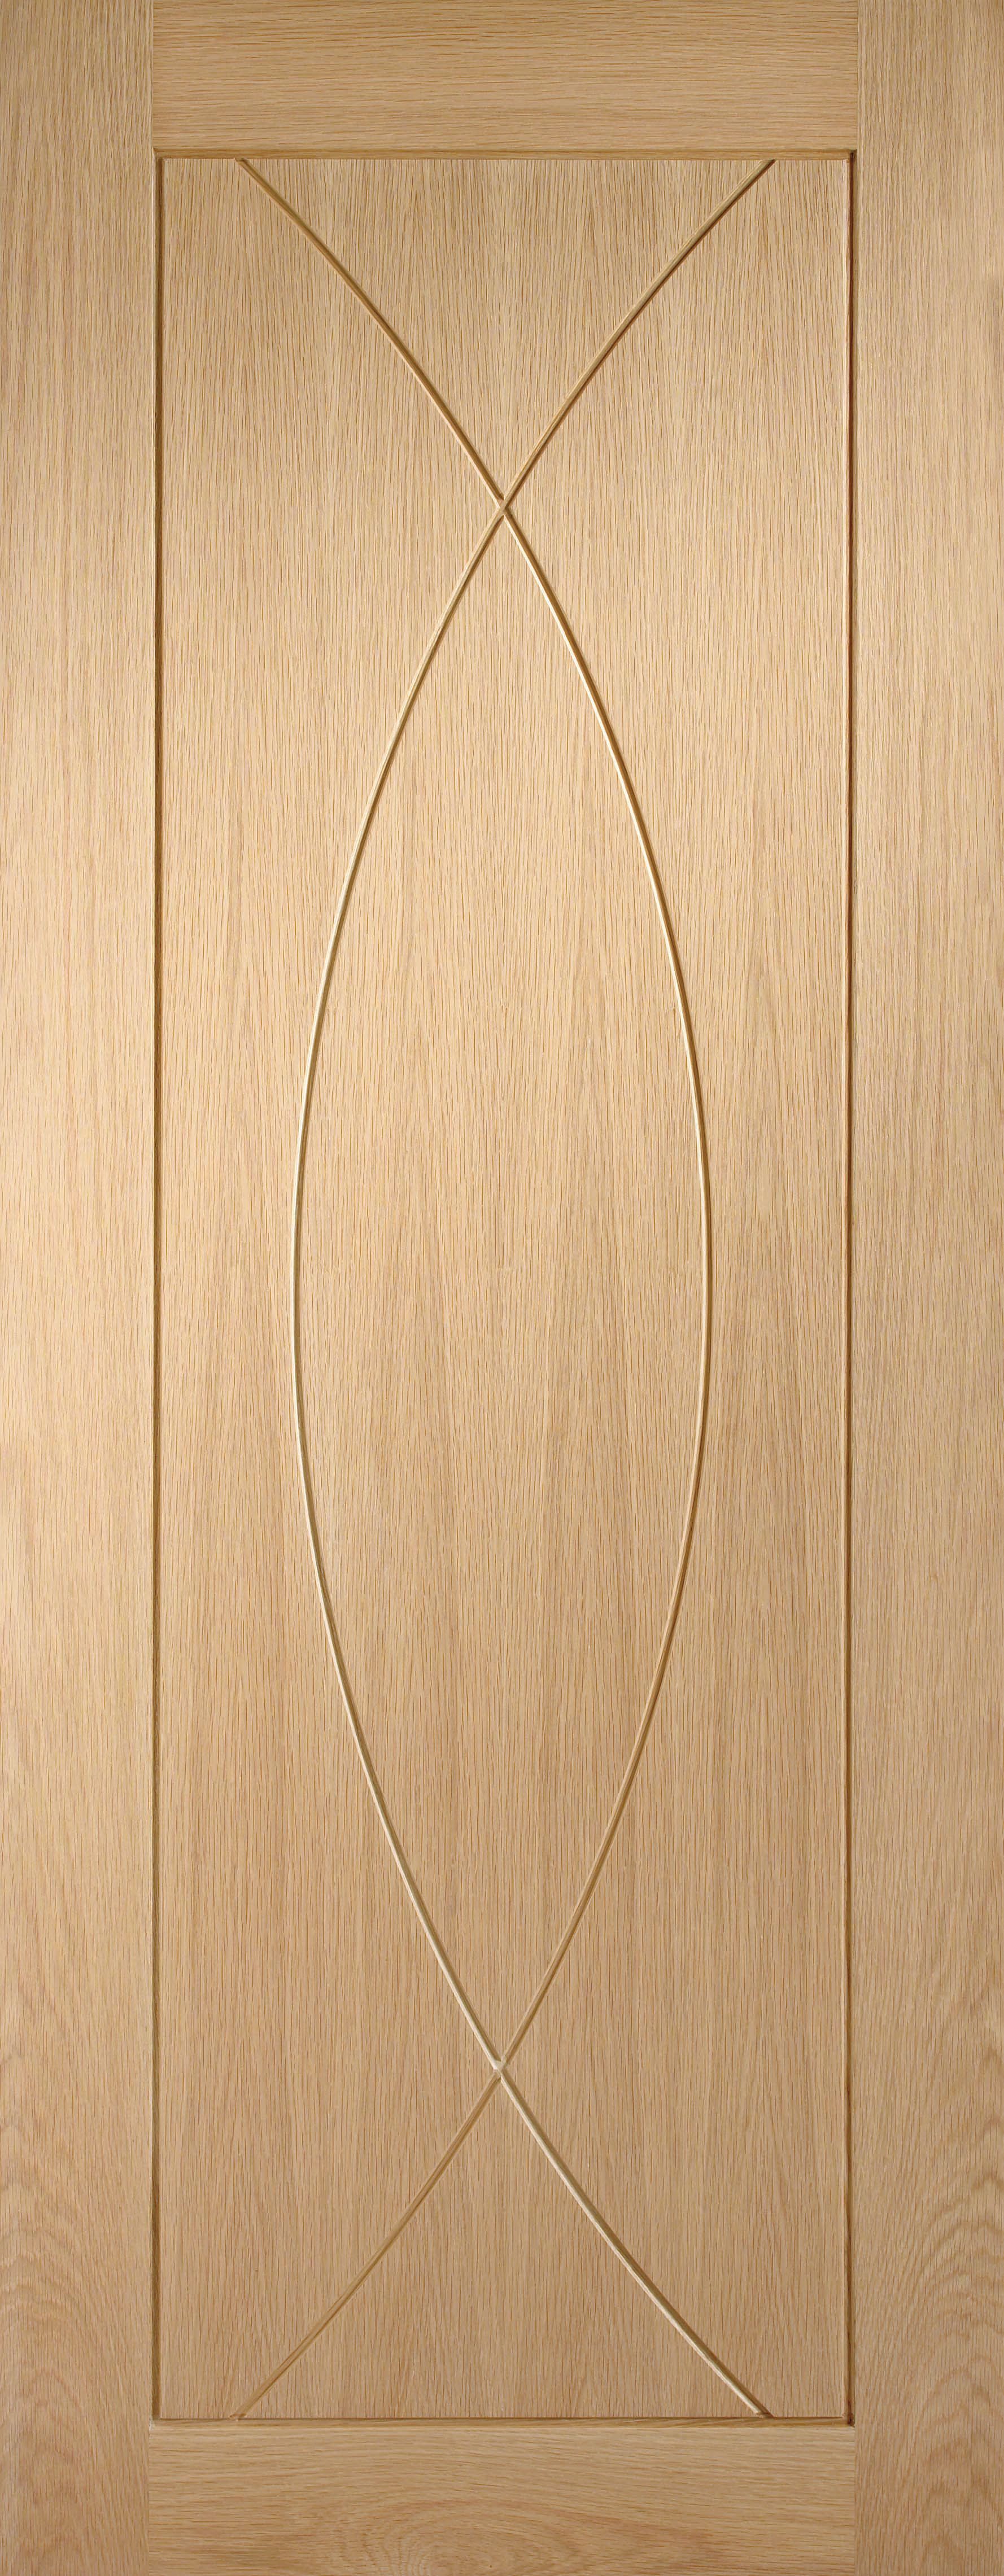 Image of XL Joinery Pesaro Oak Patterned Pre Finished Internal Door - 1981 x 838mm